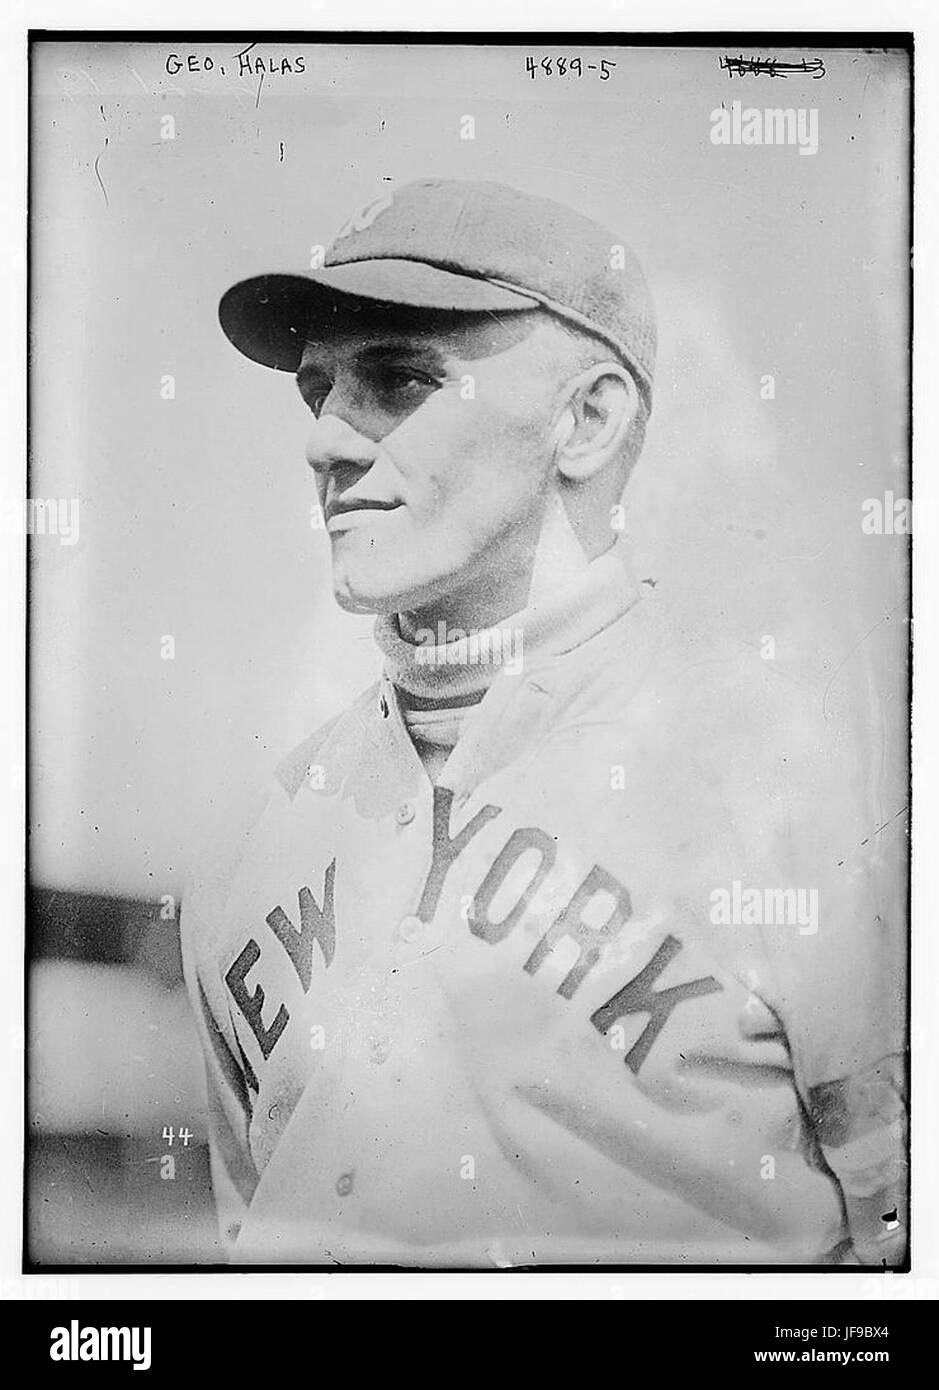 [George Halas, New York AL (baseball)]   31913811740 o Stock Photo